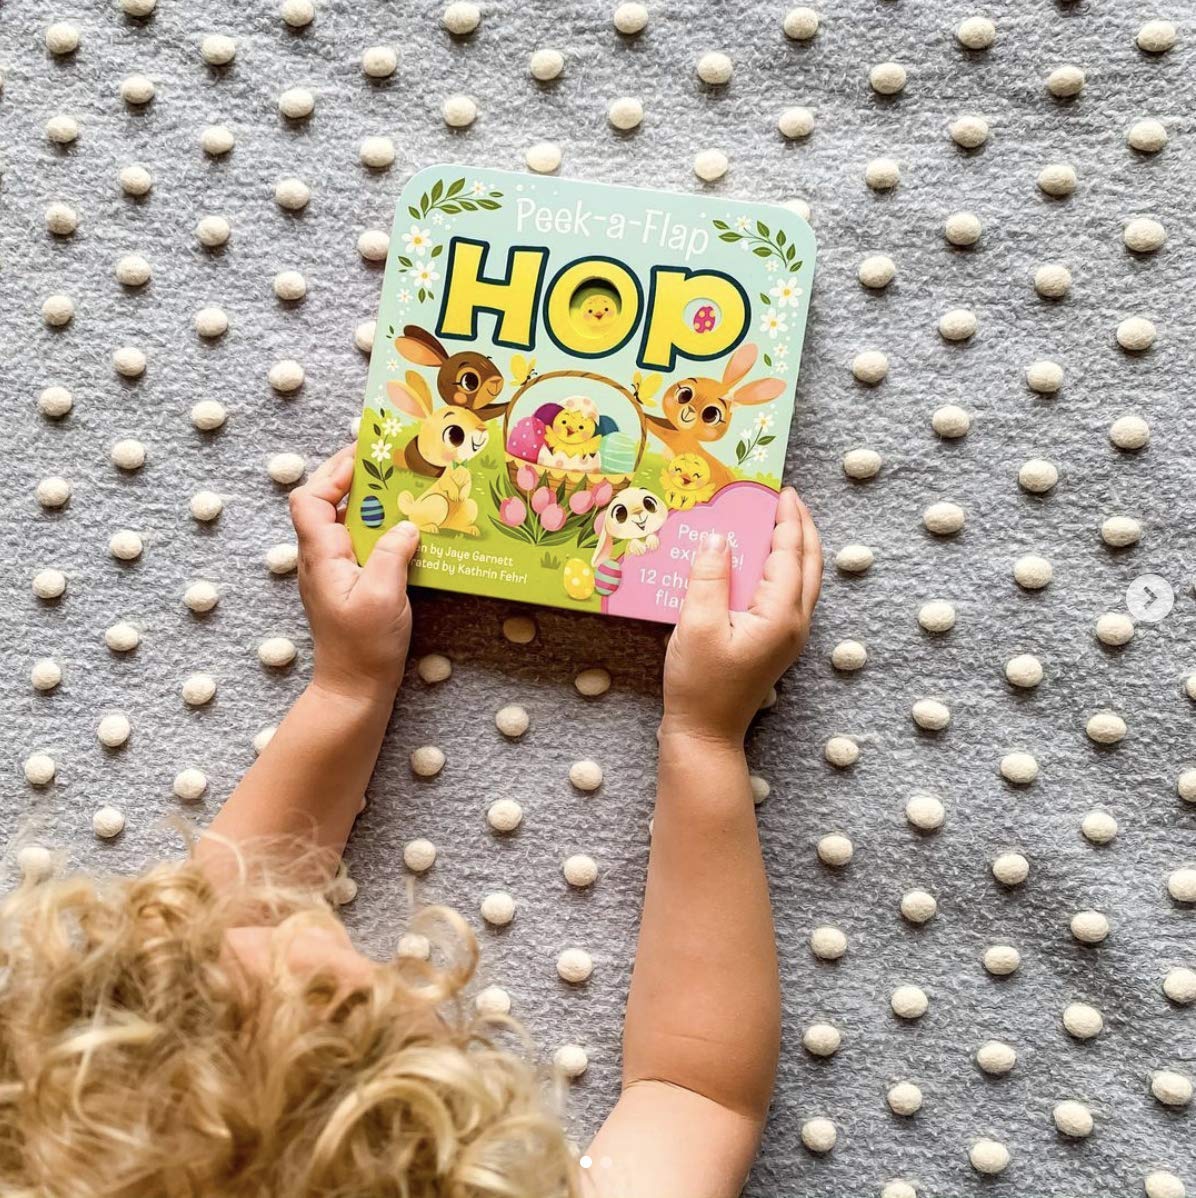 Peek-a-Flap Noah - Children's Lift-a-Flap Board Book Gift for Easter, Christmas, Communion, Baptism (Little Sunbeams)